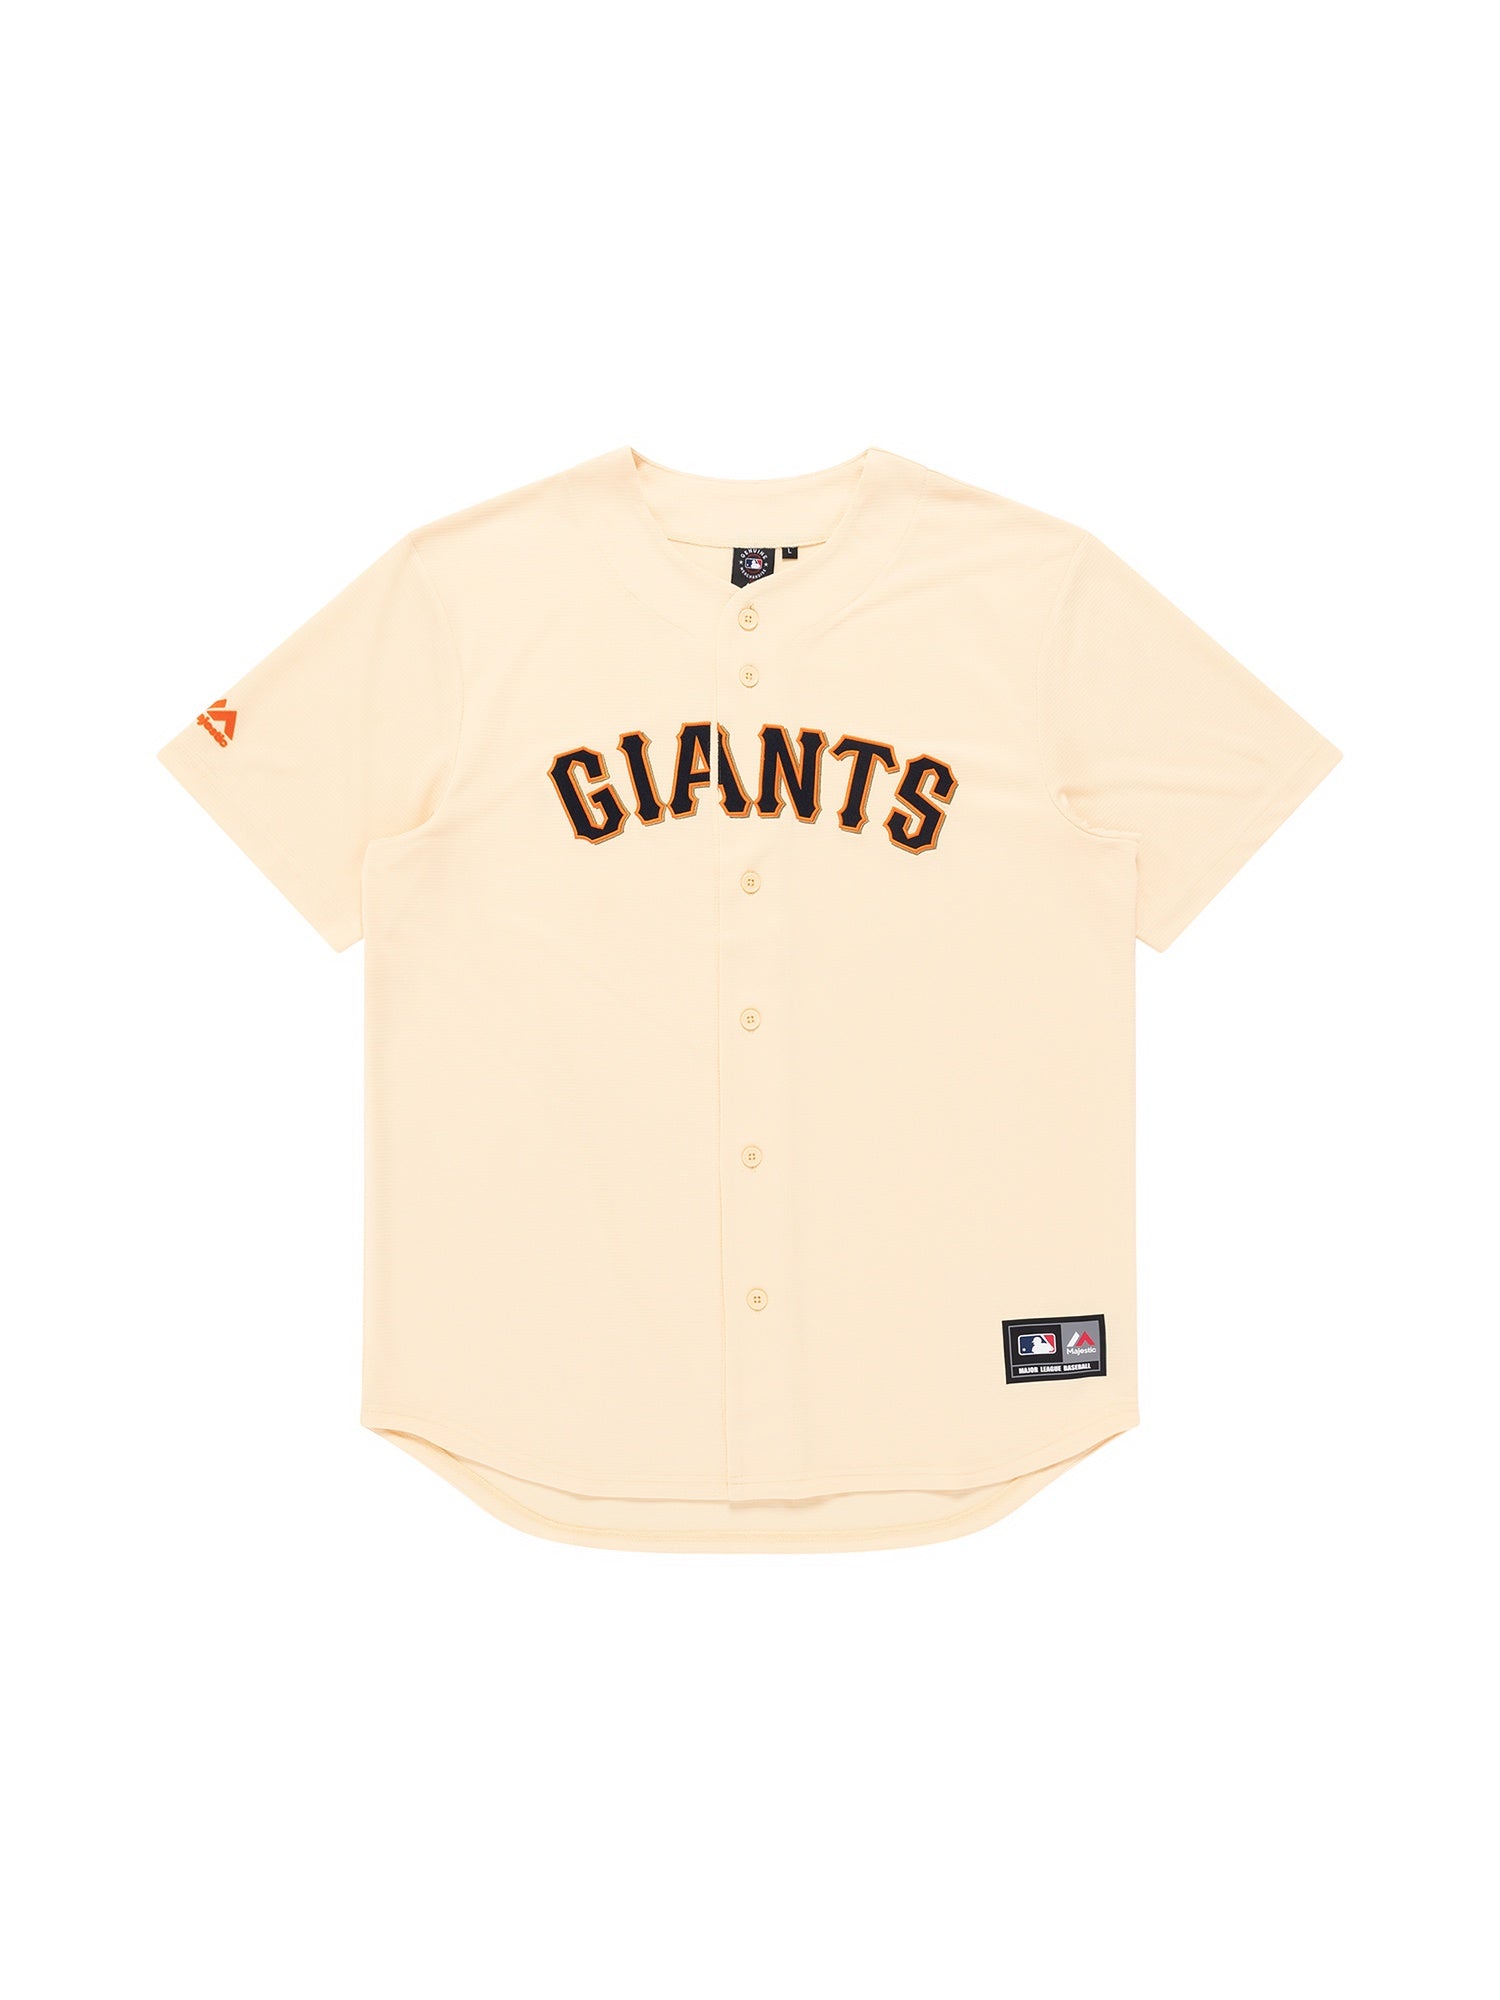 MJA-X8 (Majestic wordmark rep jersey san francisco giants mandarin